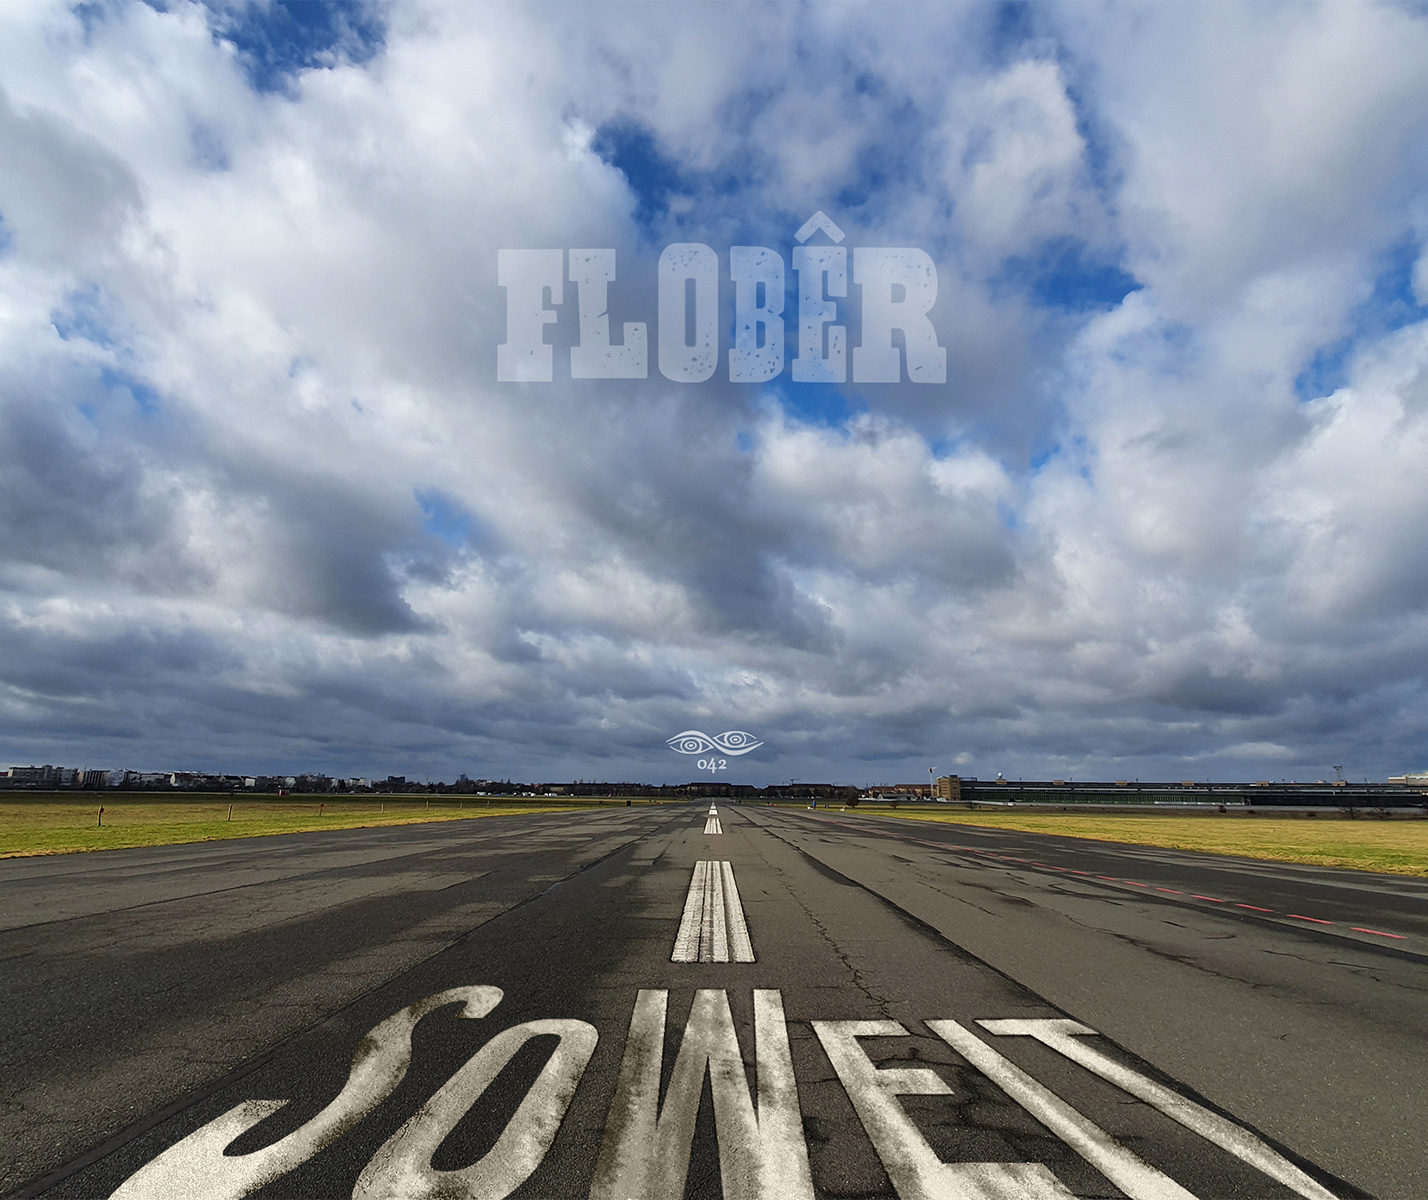 Flober-Christian-Bennat-Cover-Design-2020